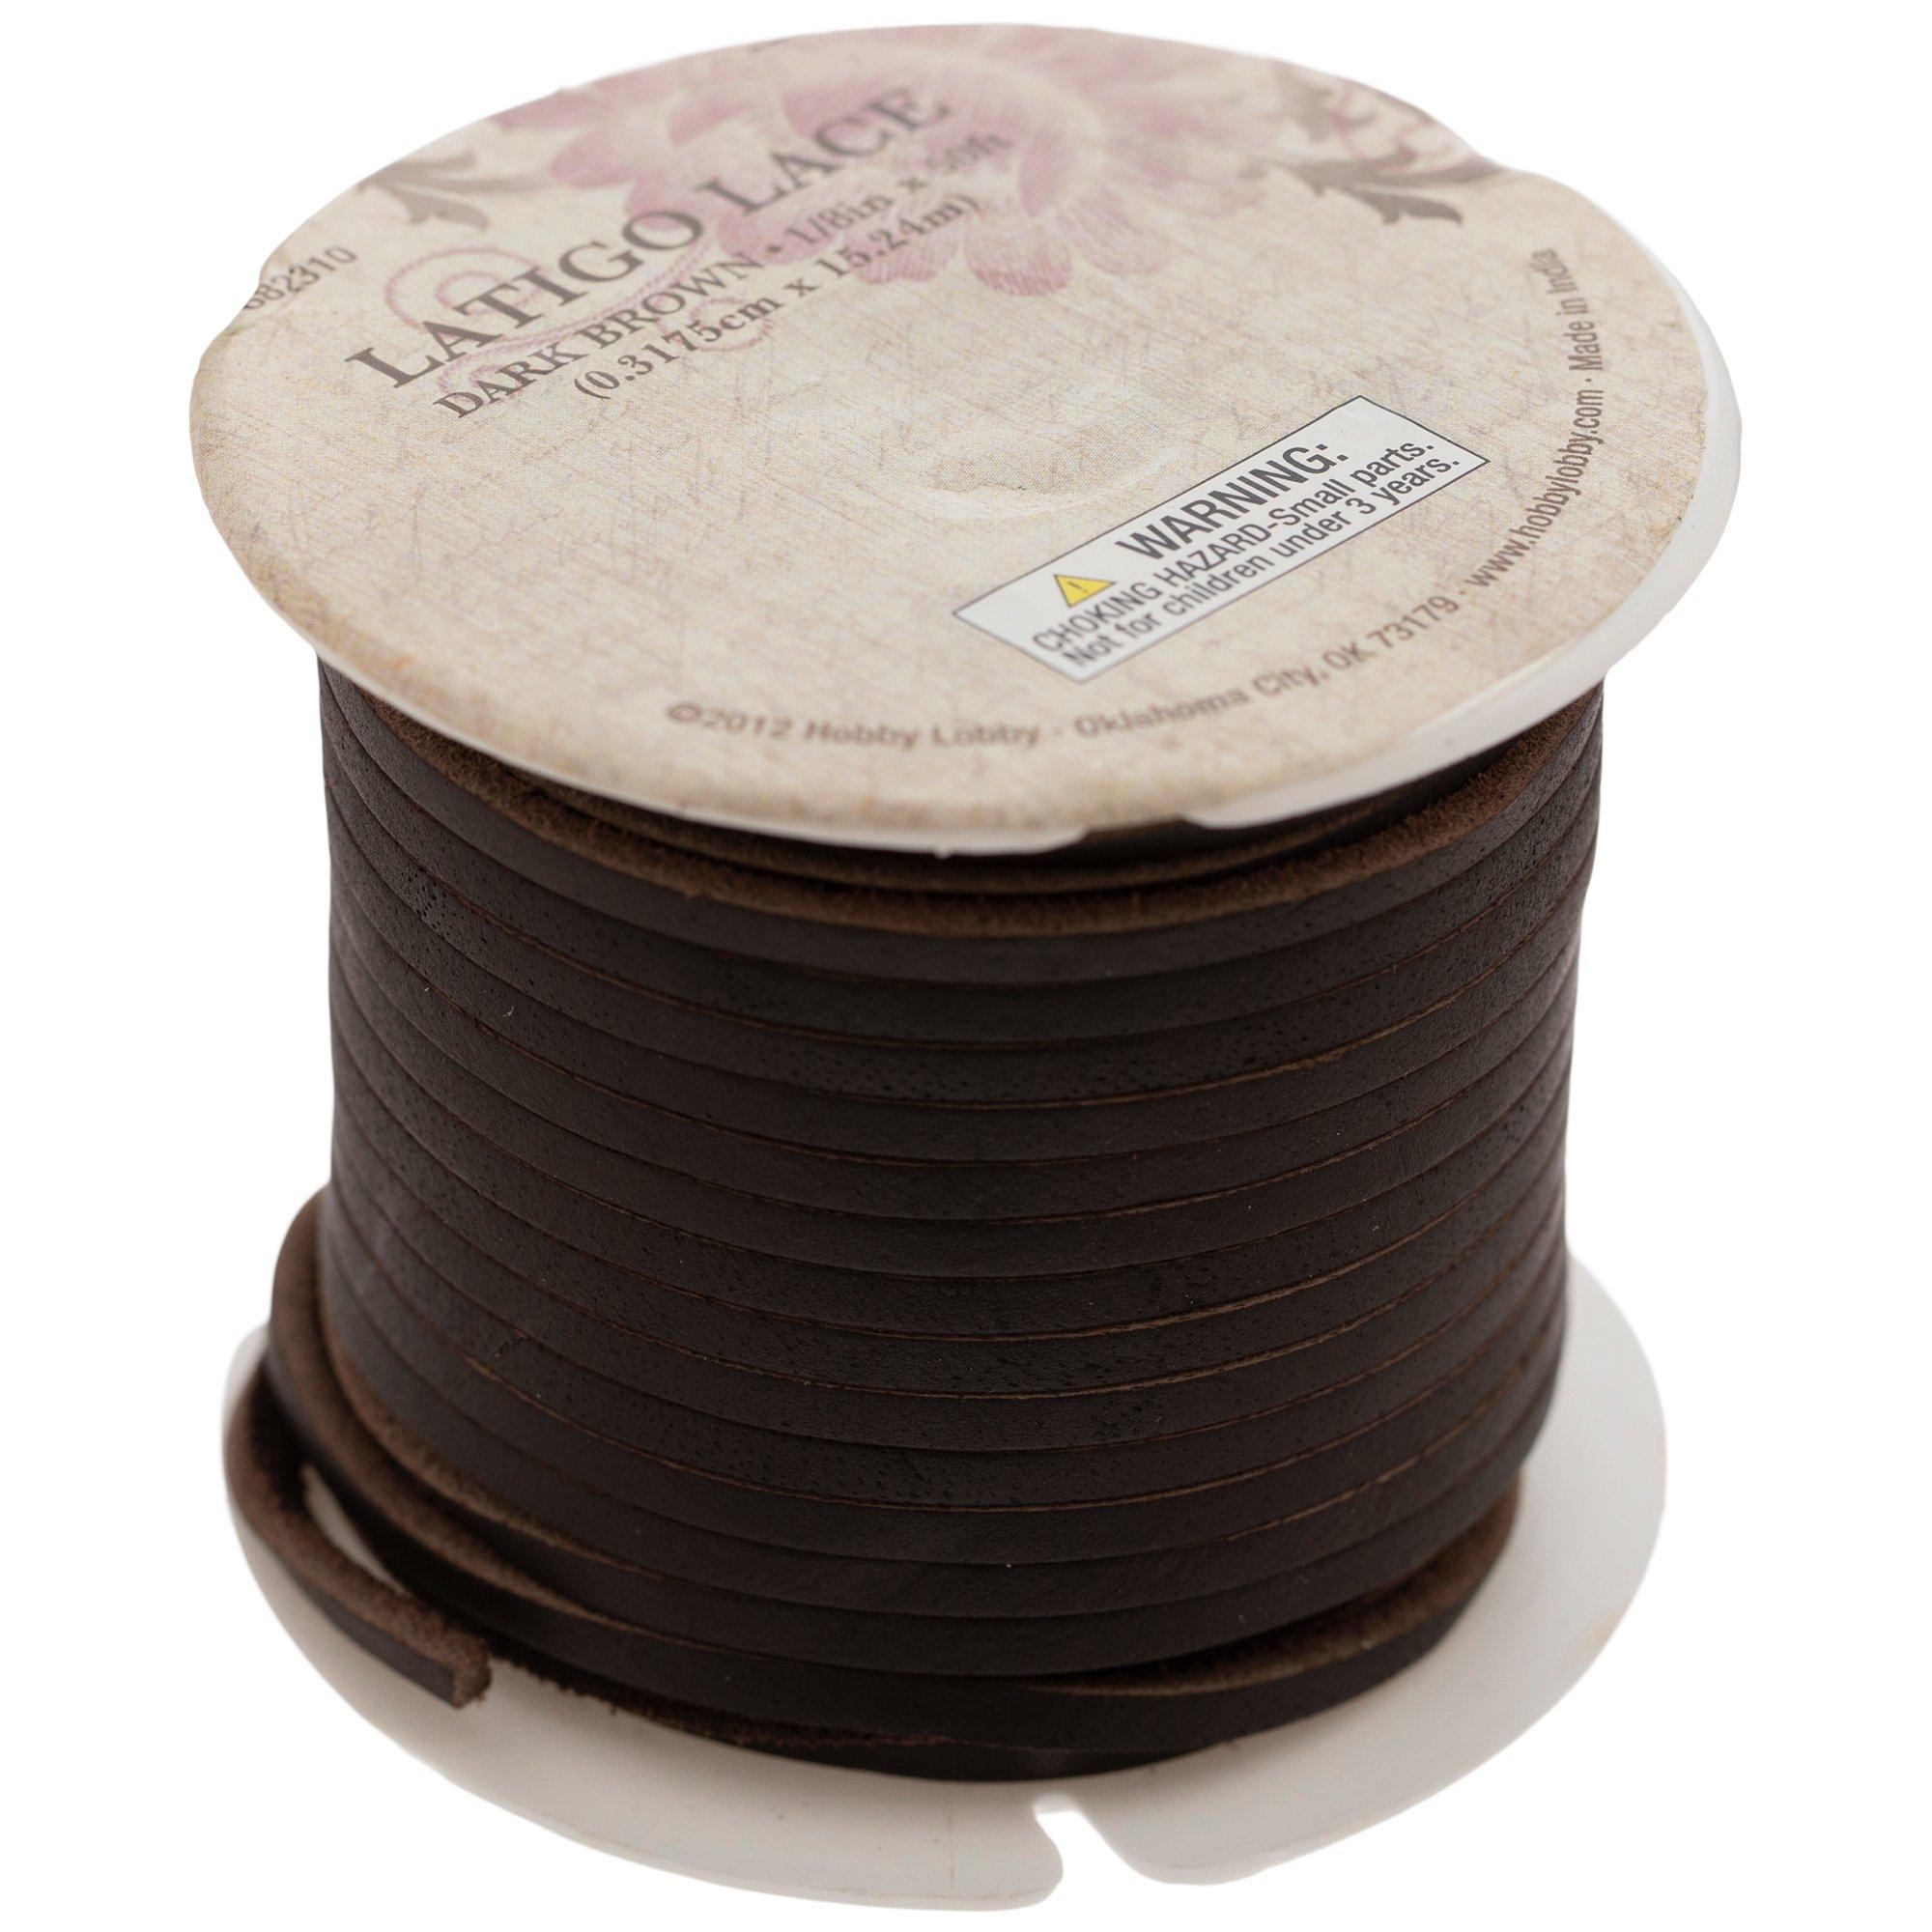 1 Pound Latigo Leather Narrow Strips Strings Laces Scraps Crafts DIY Black